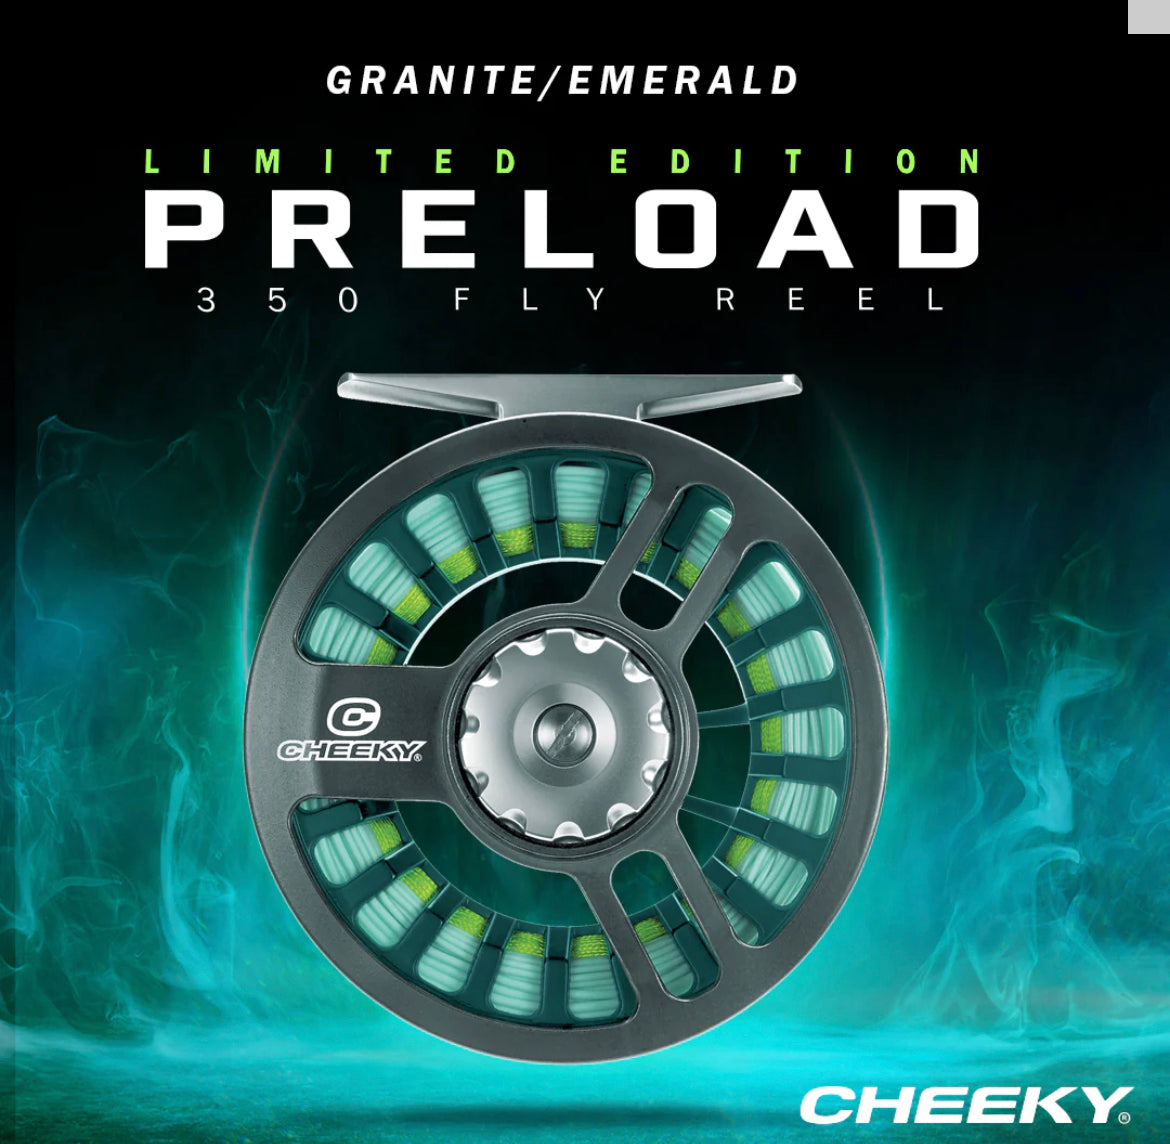 Cheeky Limited Edition 5-6 wt Granite/Emerald prespool reel